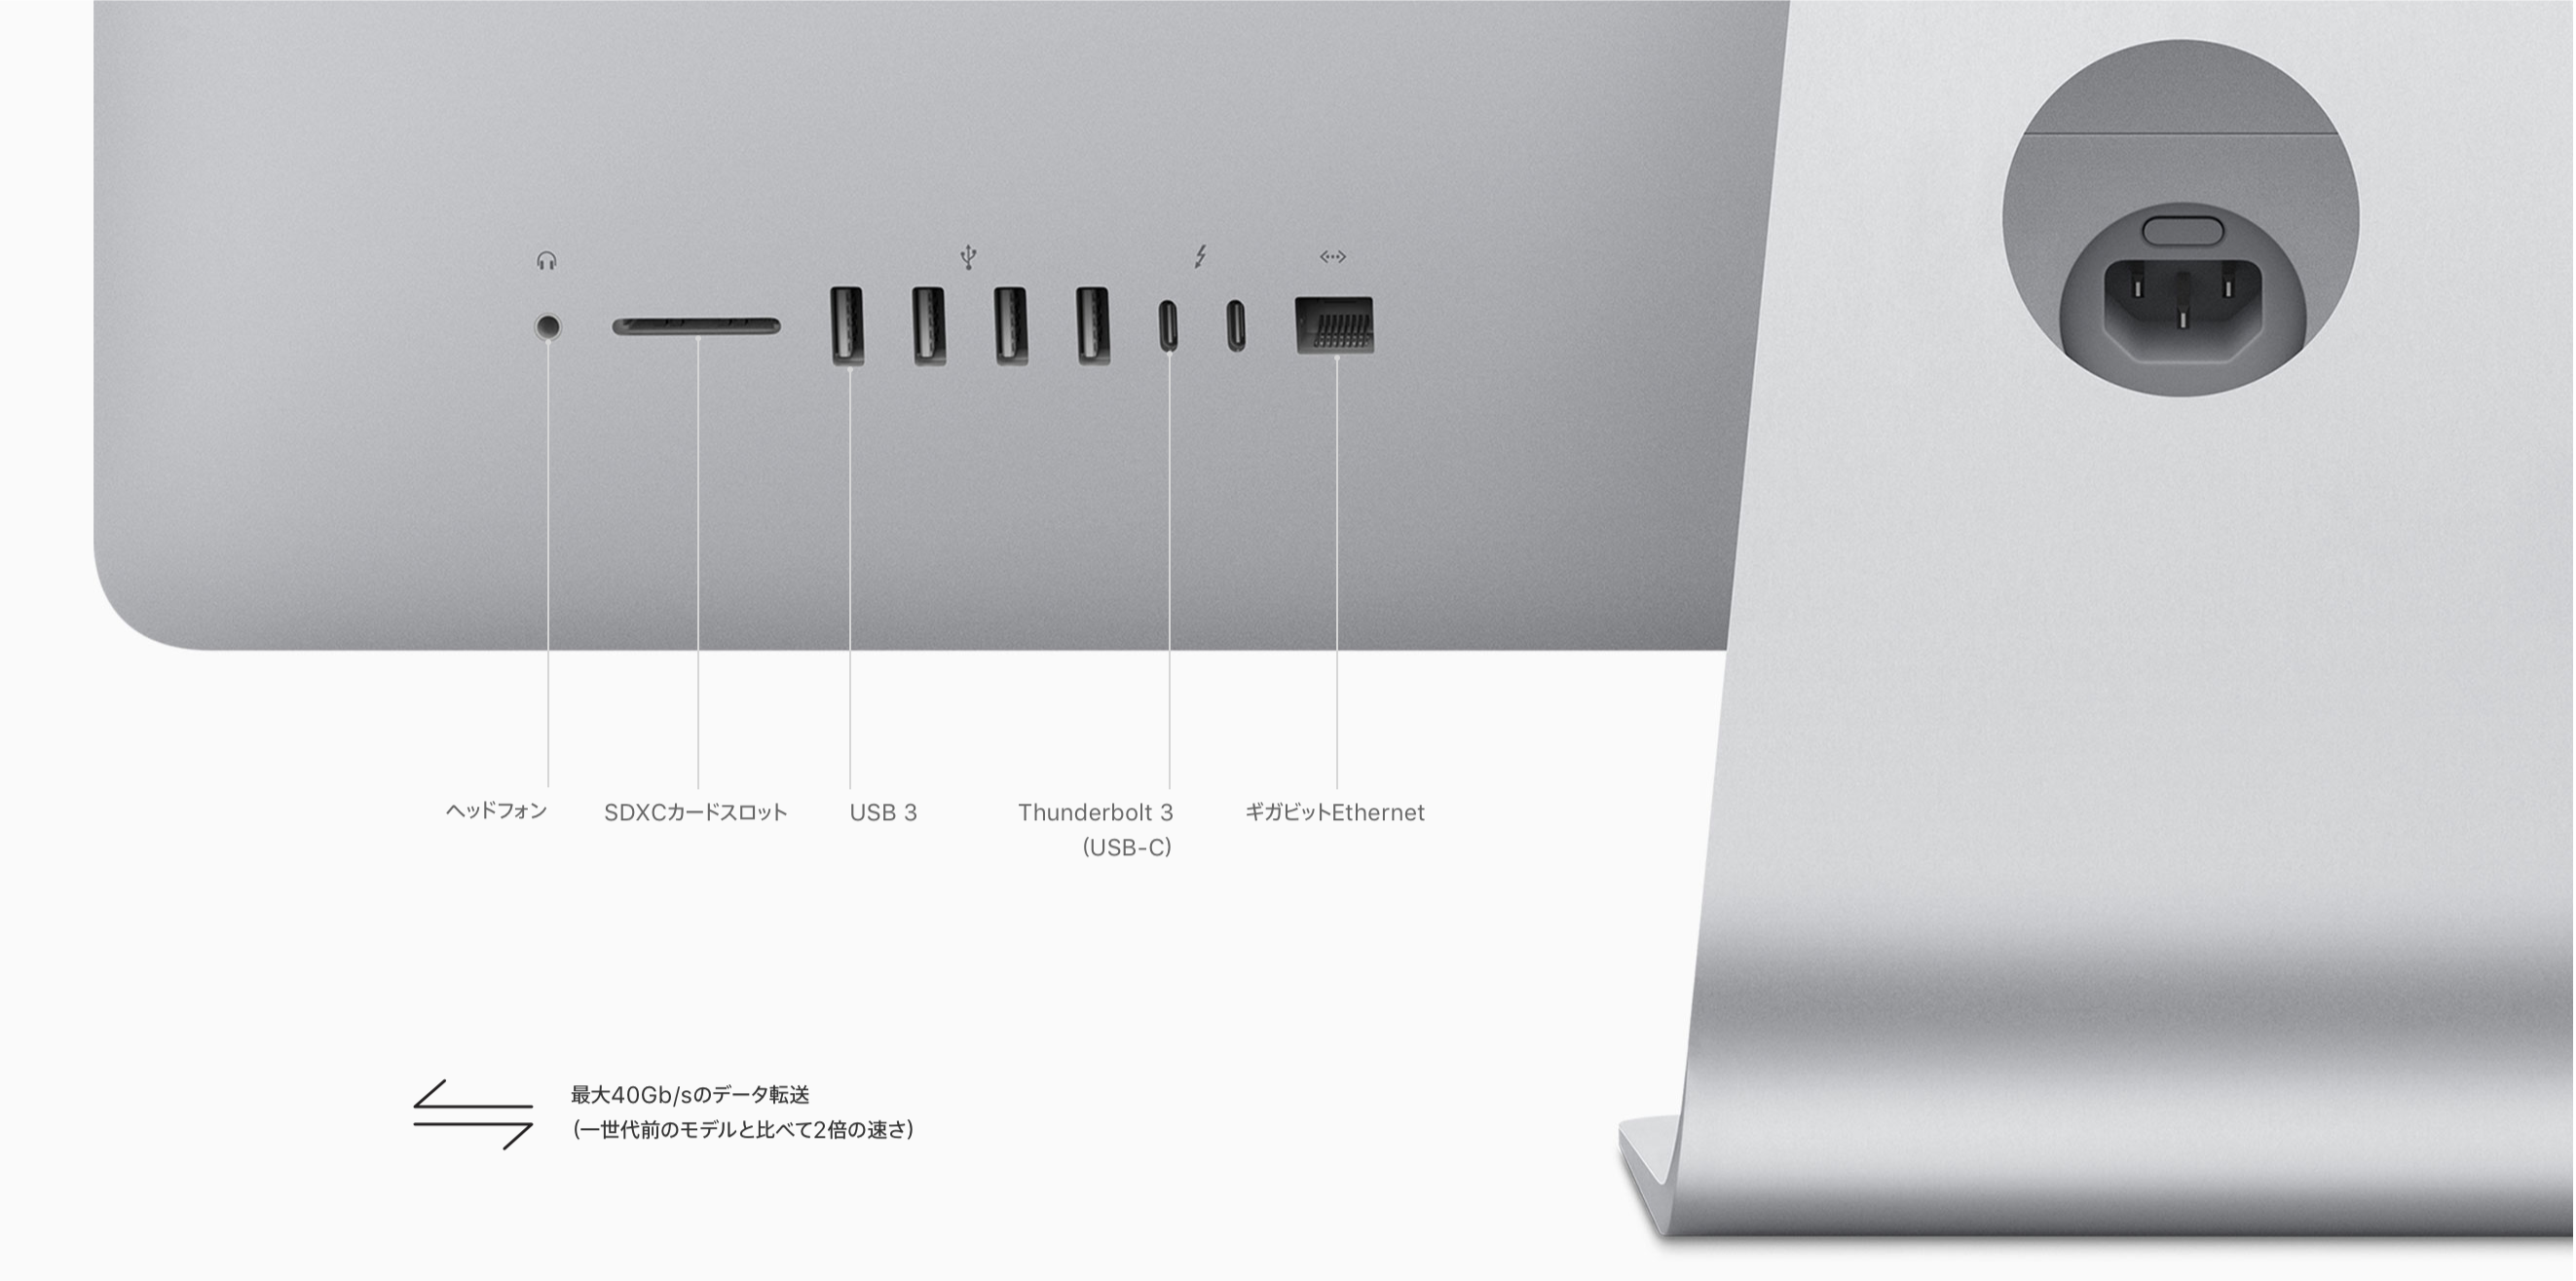 iMac Retina 5K, 27-inch, 2017【メモリ24MB】